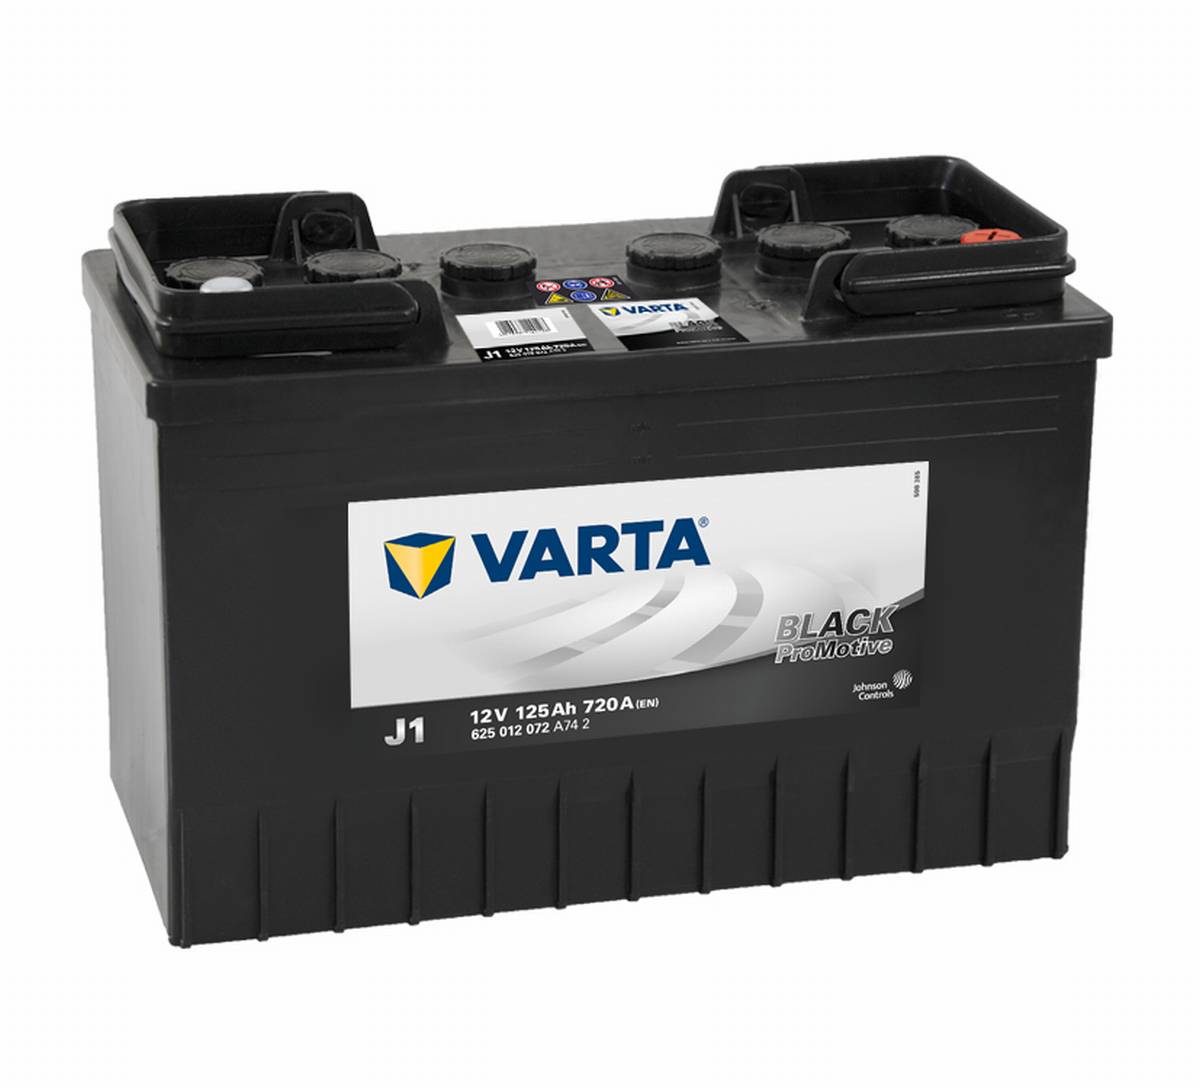 Varta J1 ProMotive Heavy Duty 12V 125Ah 720A Truck Battery 625 012 072